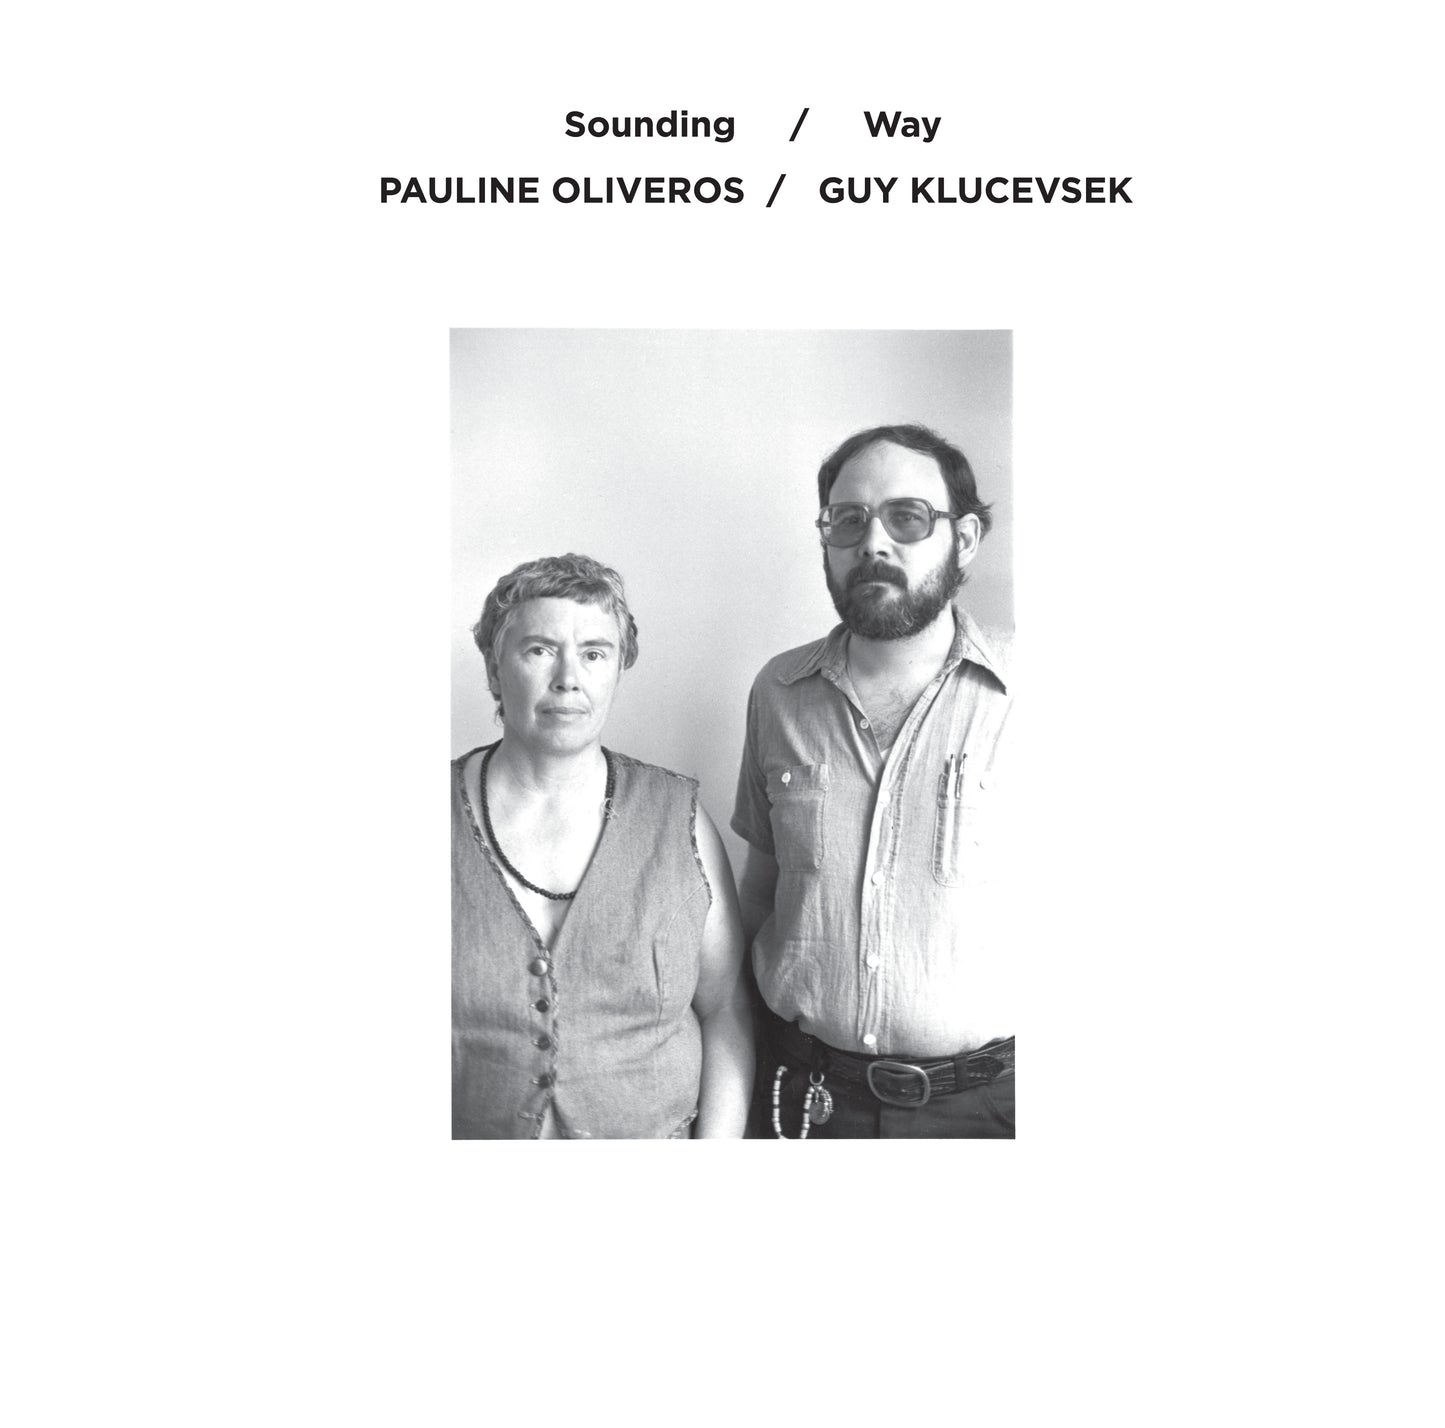 Pauline Oliveros & Guy Klucevsek - Sounding / Way - Cassette